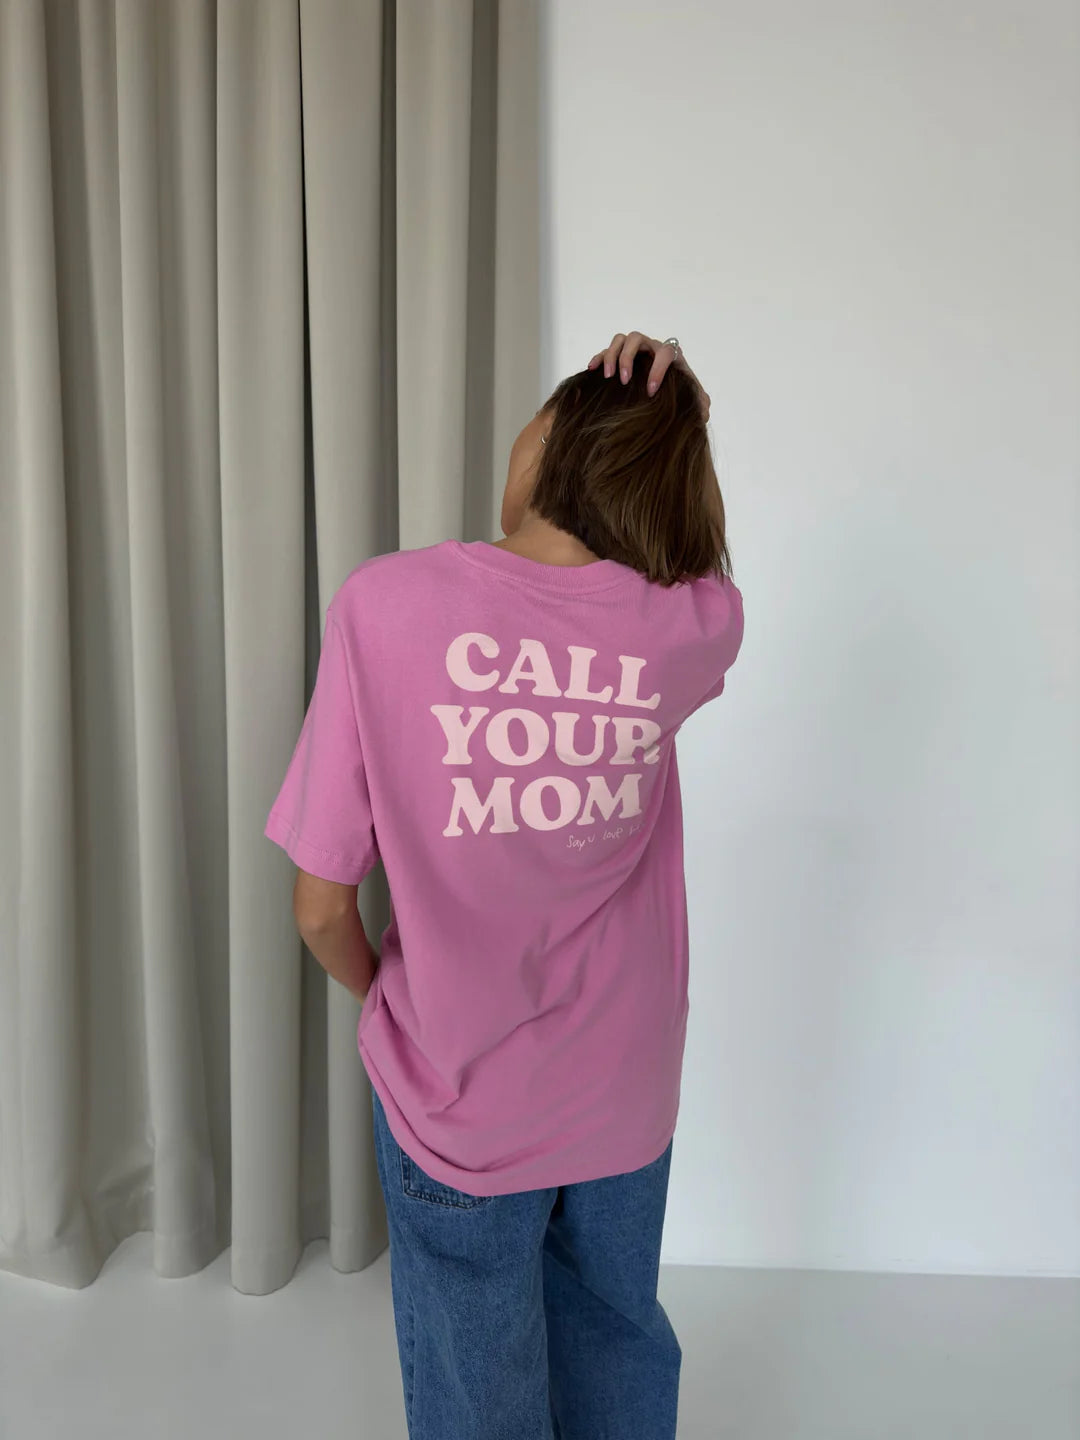 call-your-mom-t-shirt-rosa-358074_1080x_jpg.webp